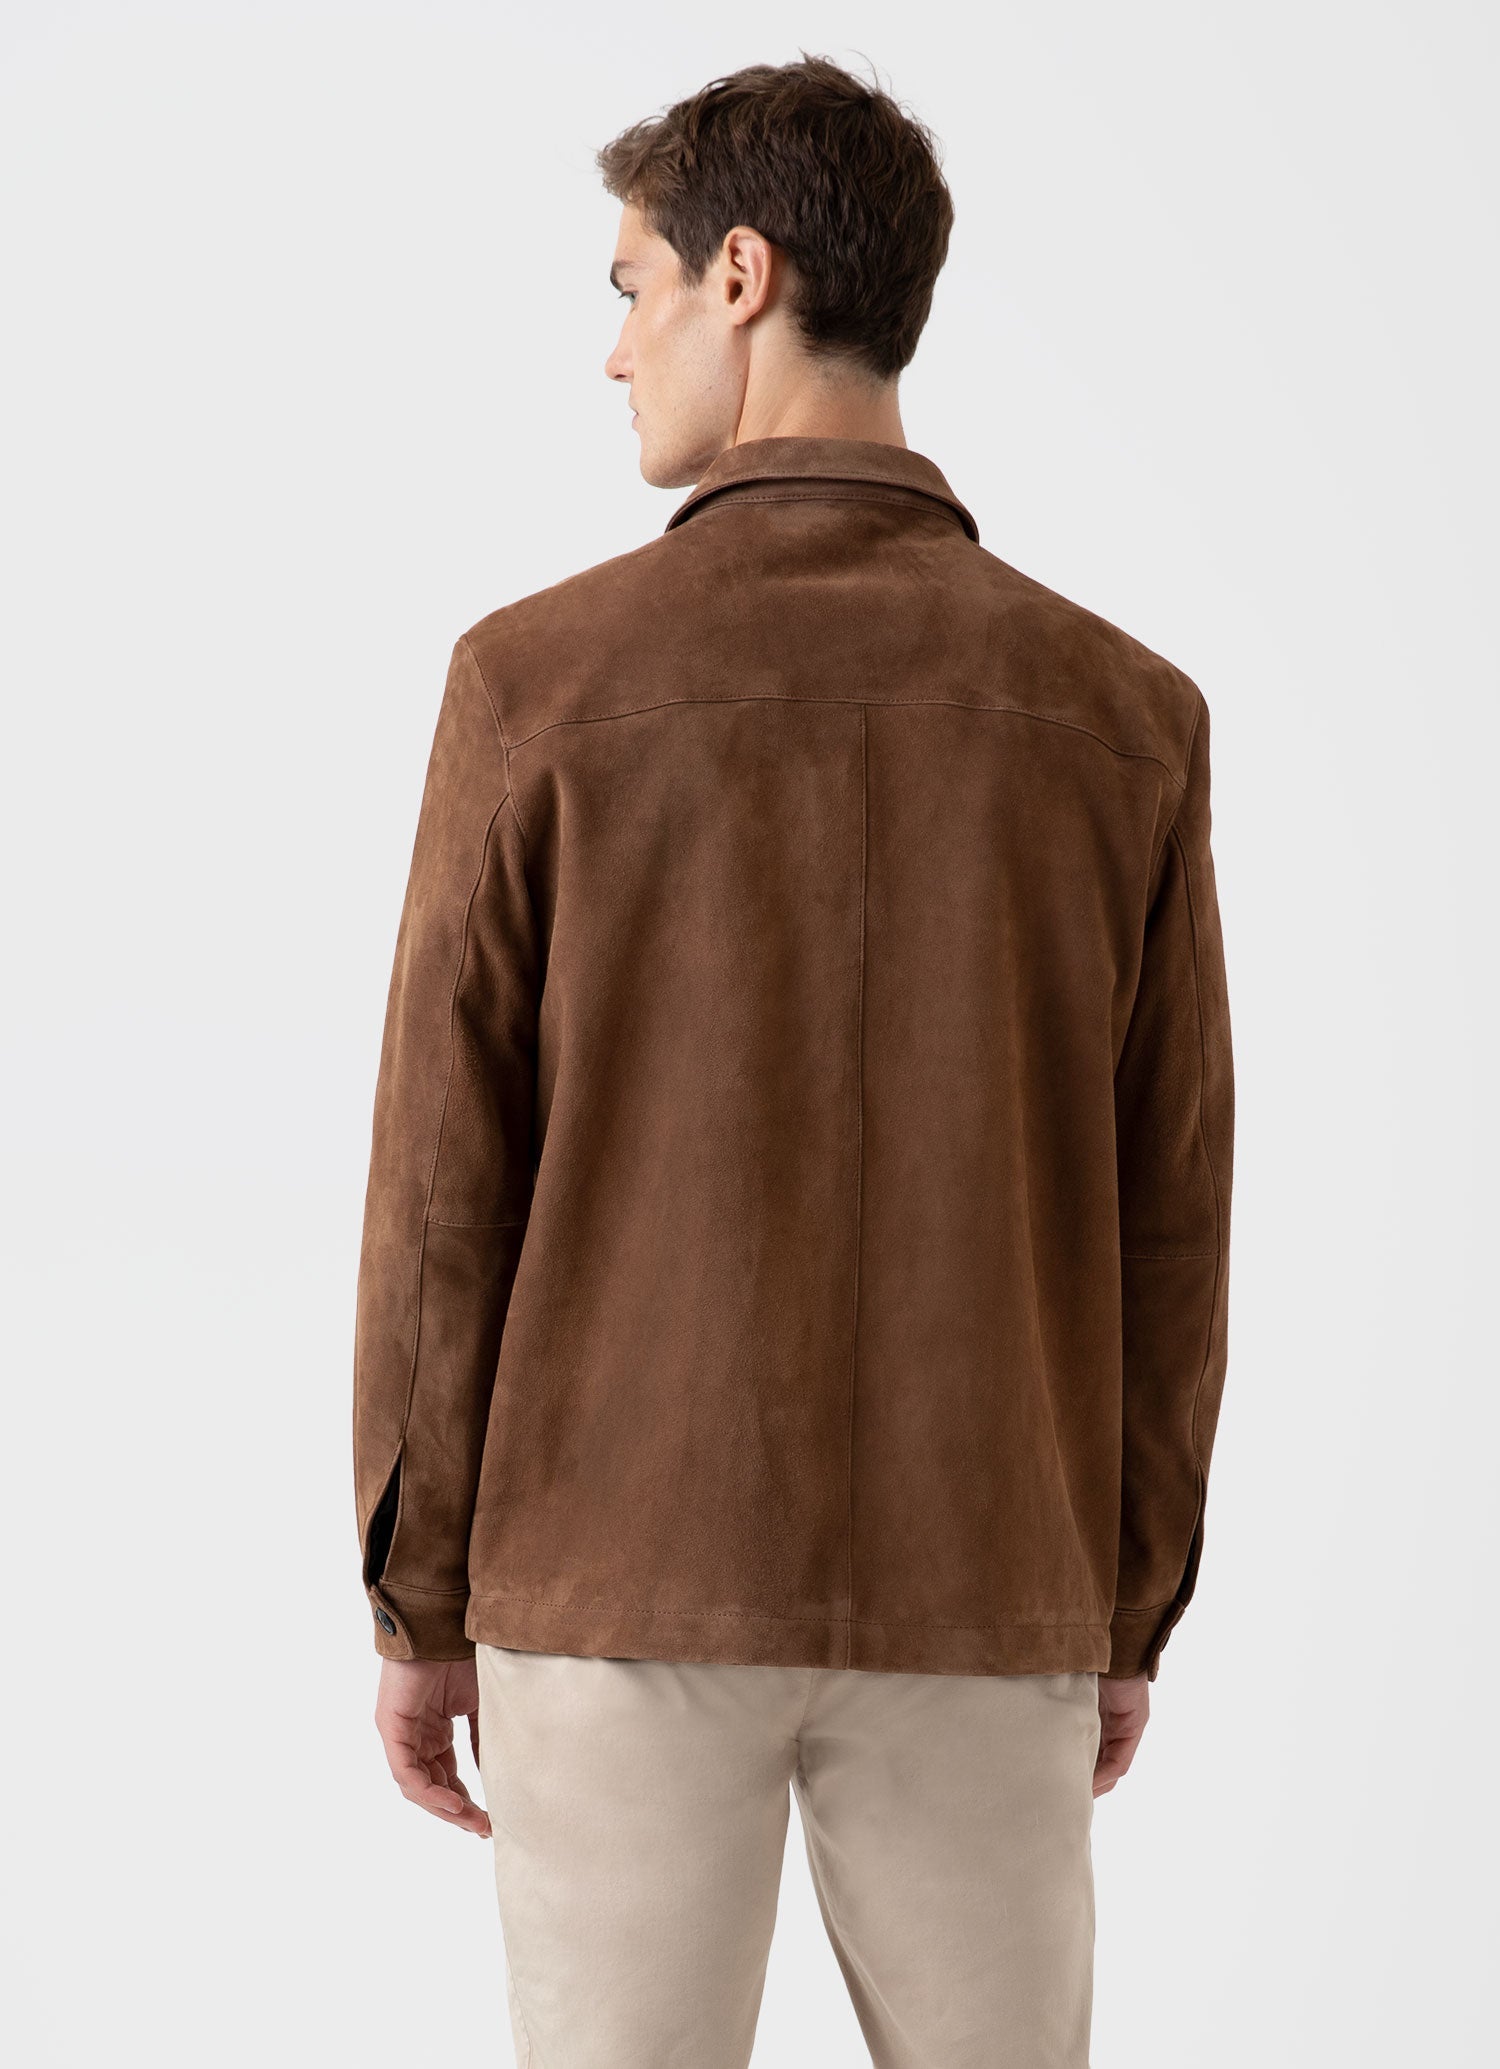 Men's Suede Twin Pocket Jacket in Light Brown